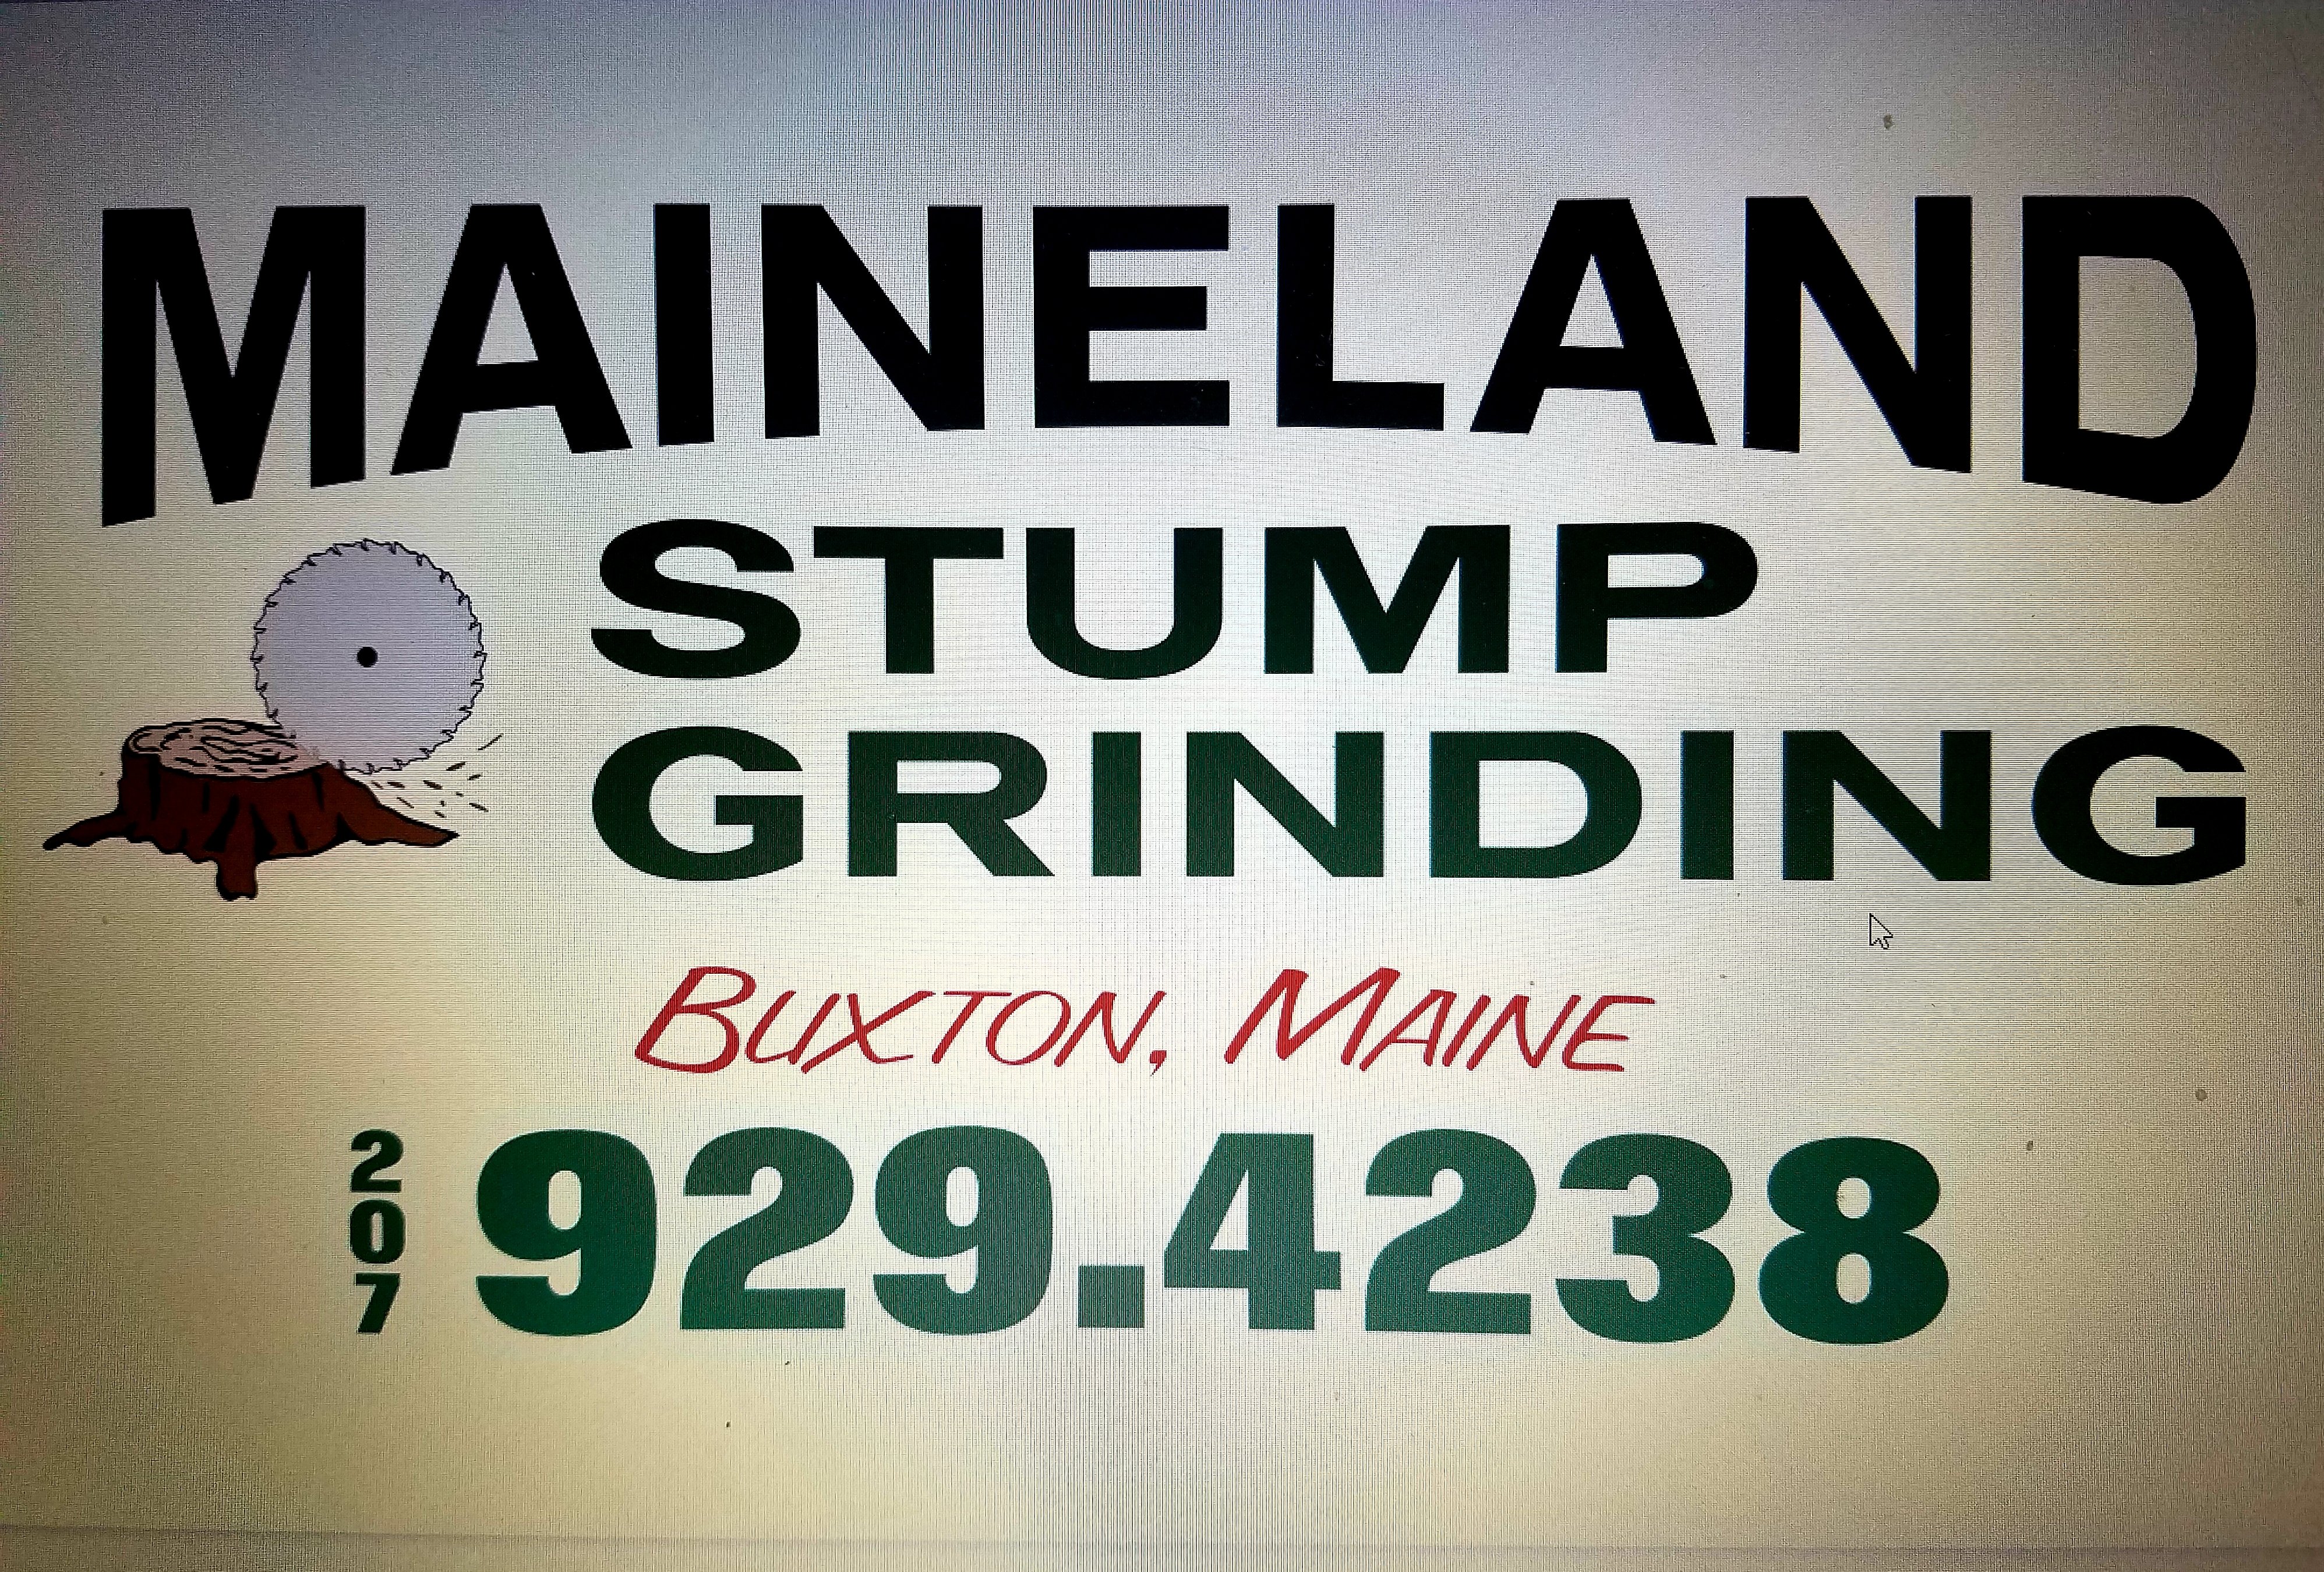 Maineland Stump Grinding,LLC Logo